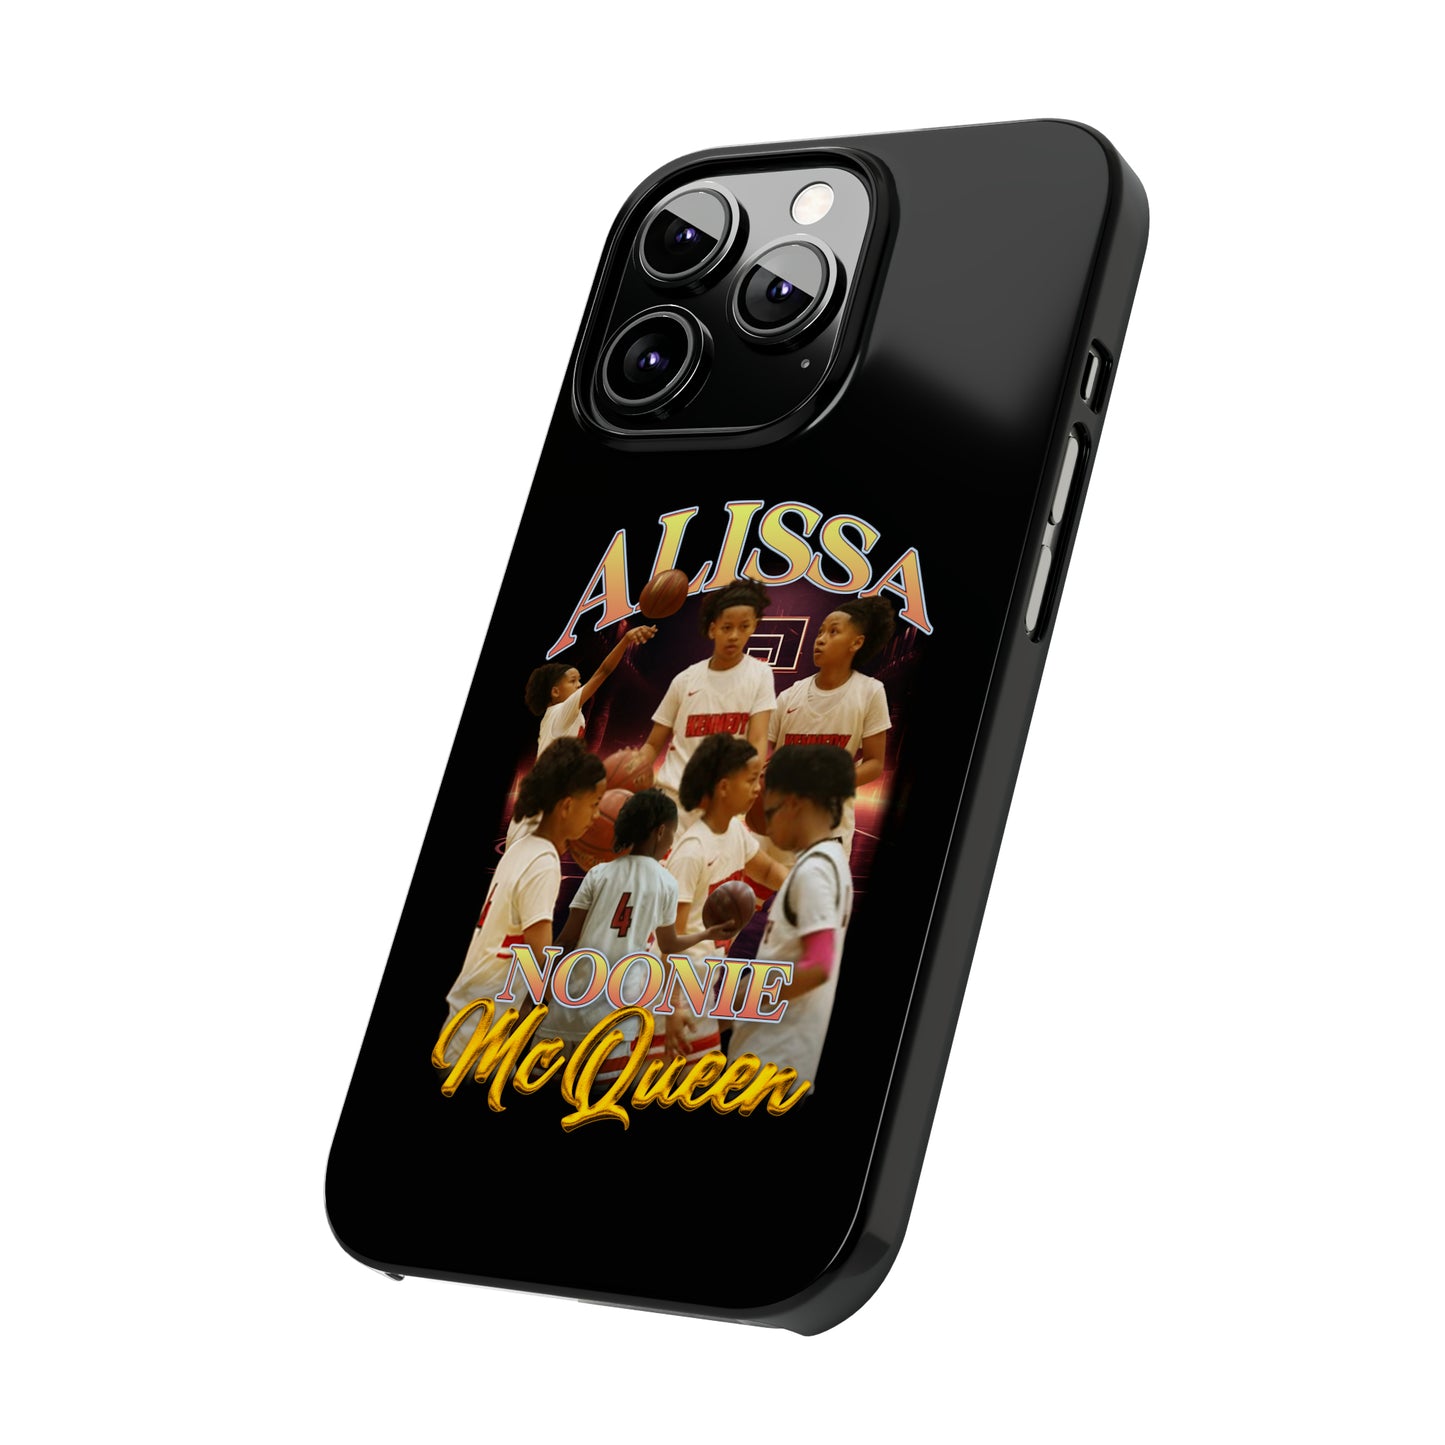 Alissa Noonie McQueen Phone Case